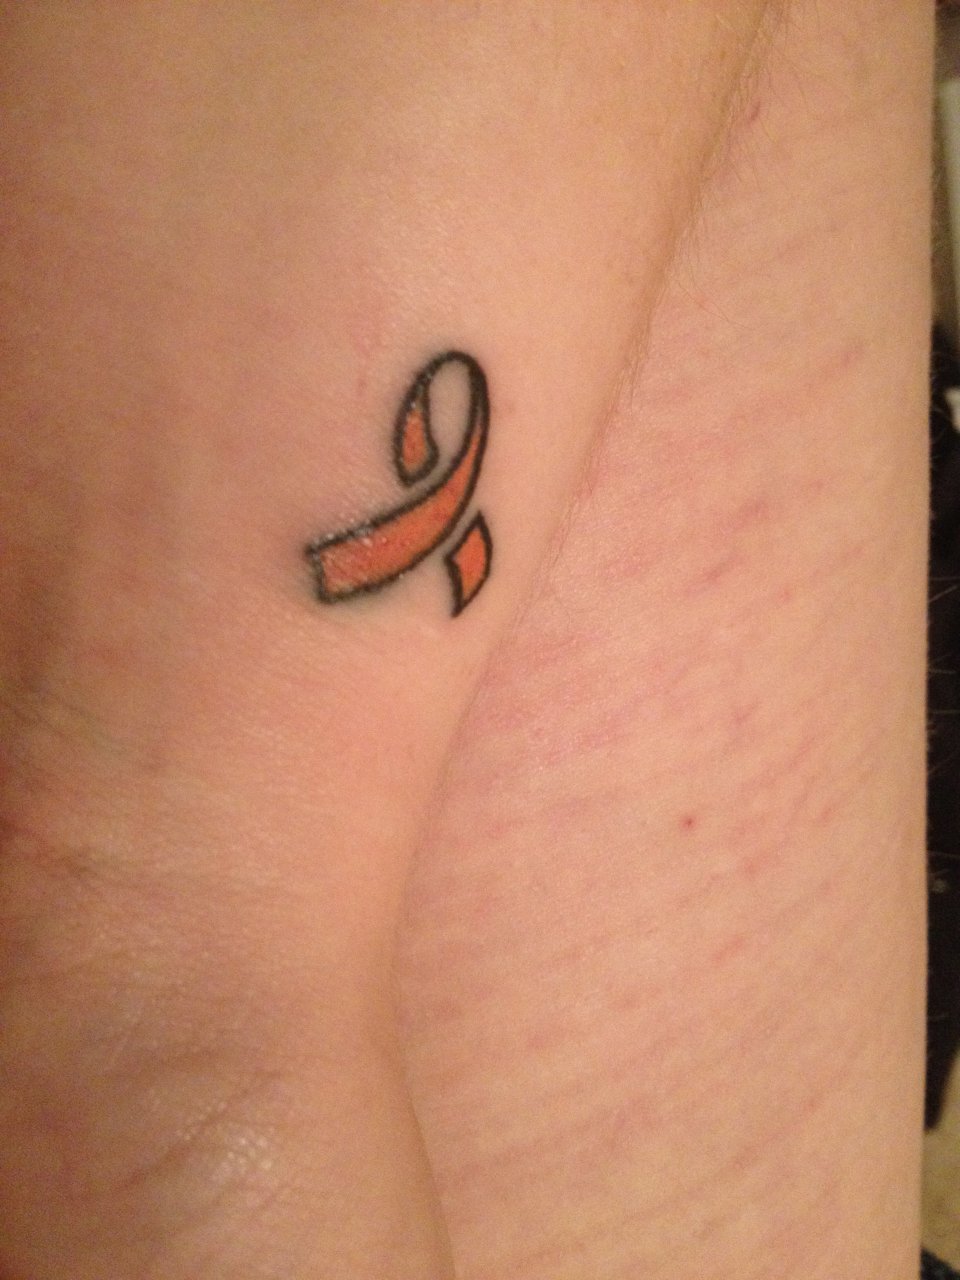 self harm recovery symbol tattoo